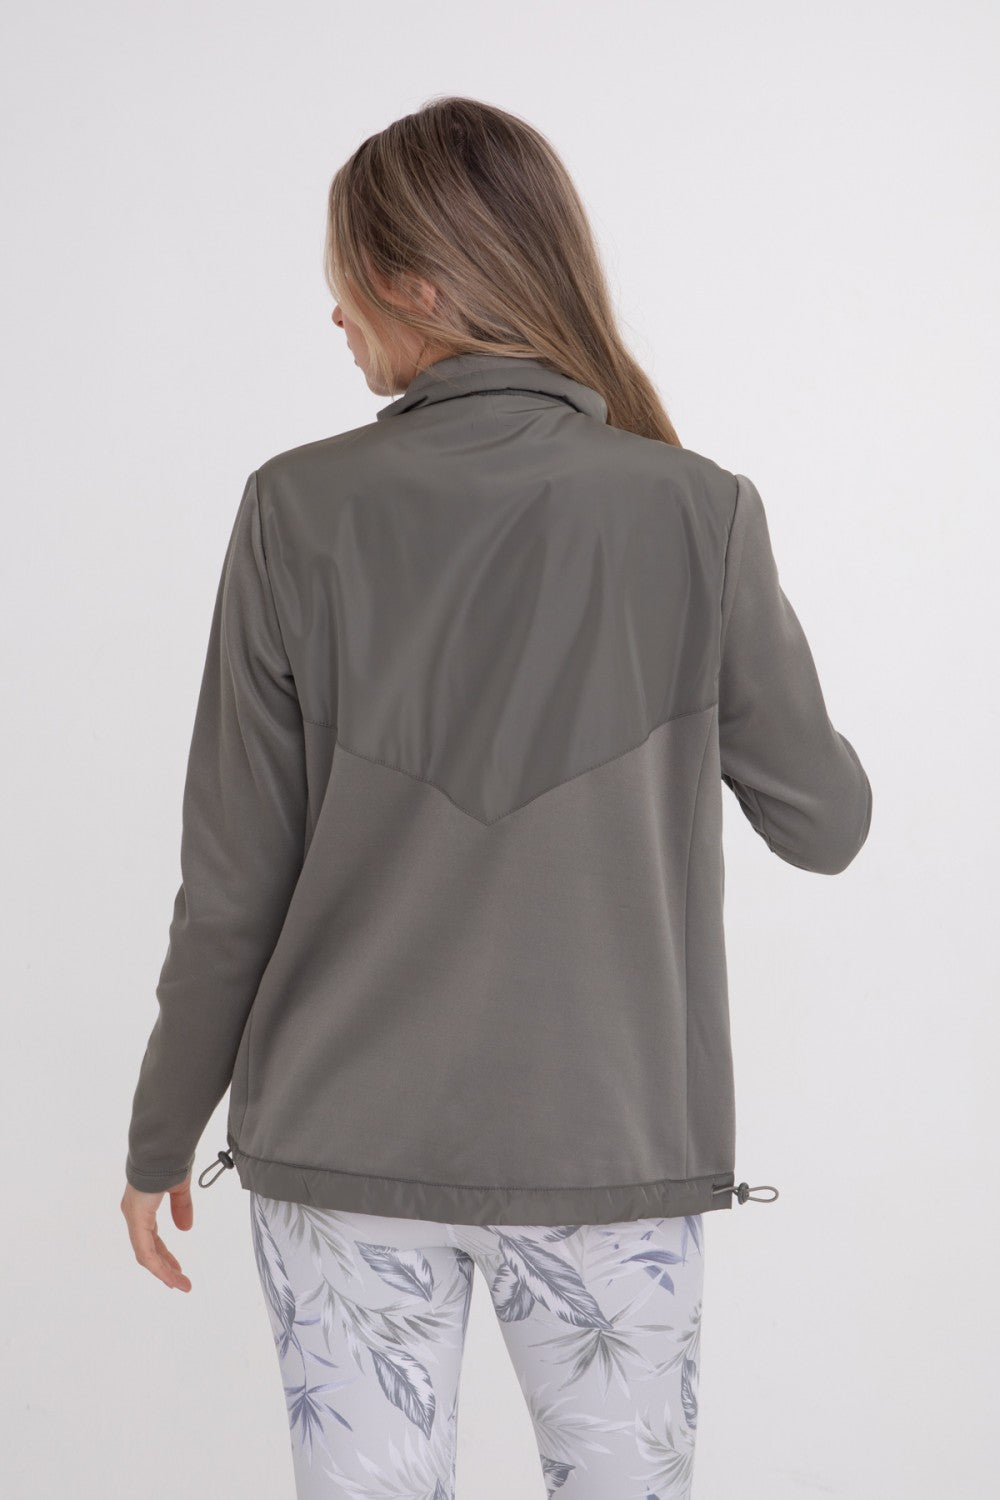 Fabric Contrast Zip-Up Jacket - KJ-B1001